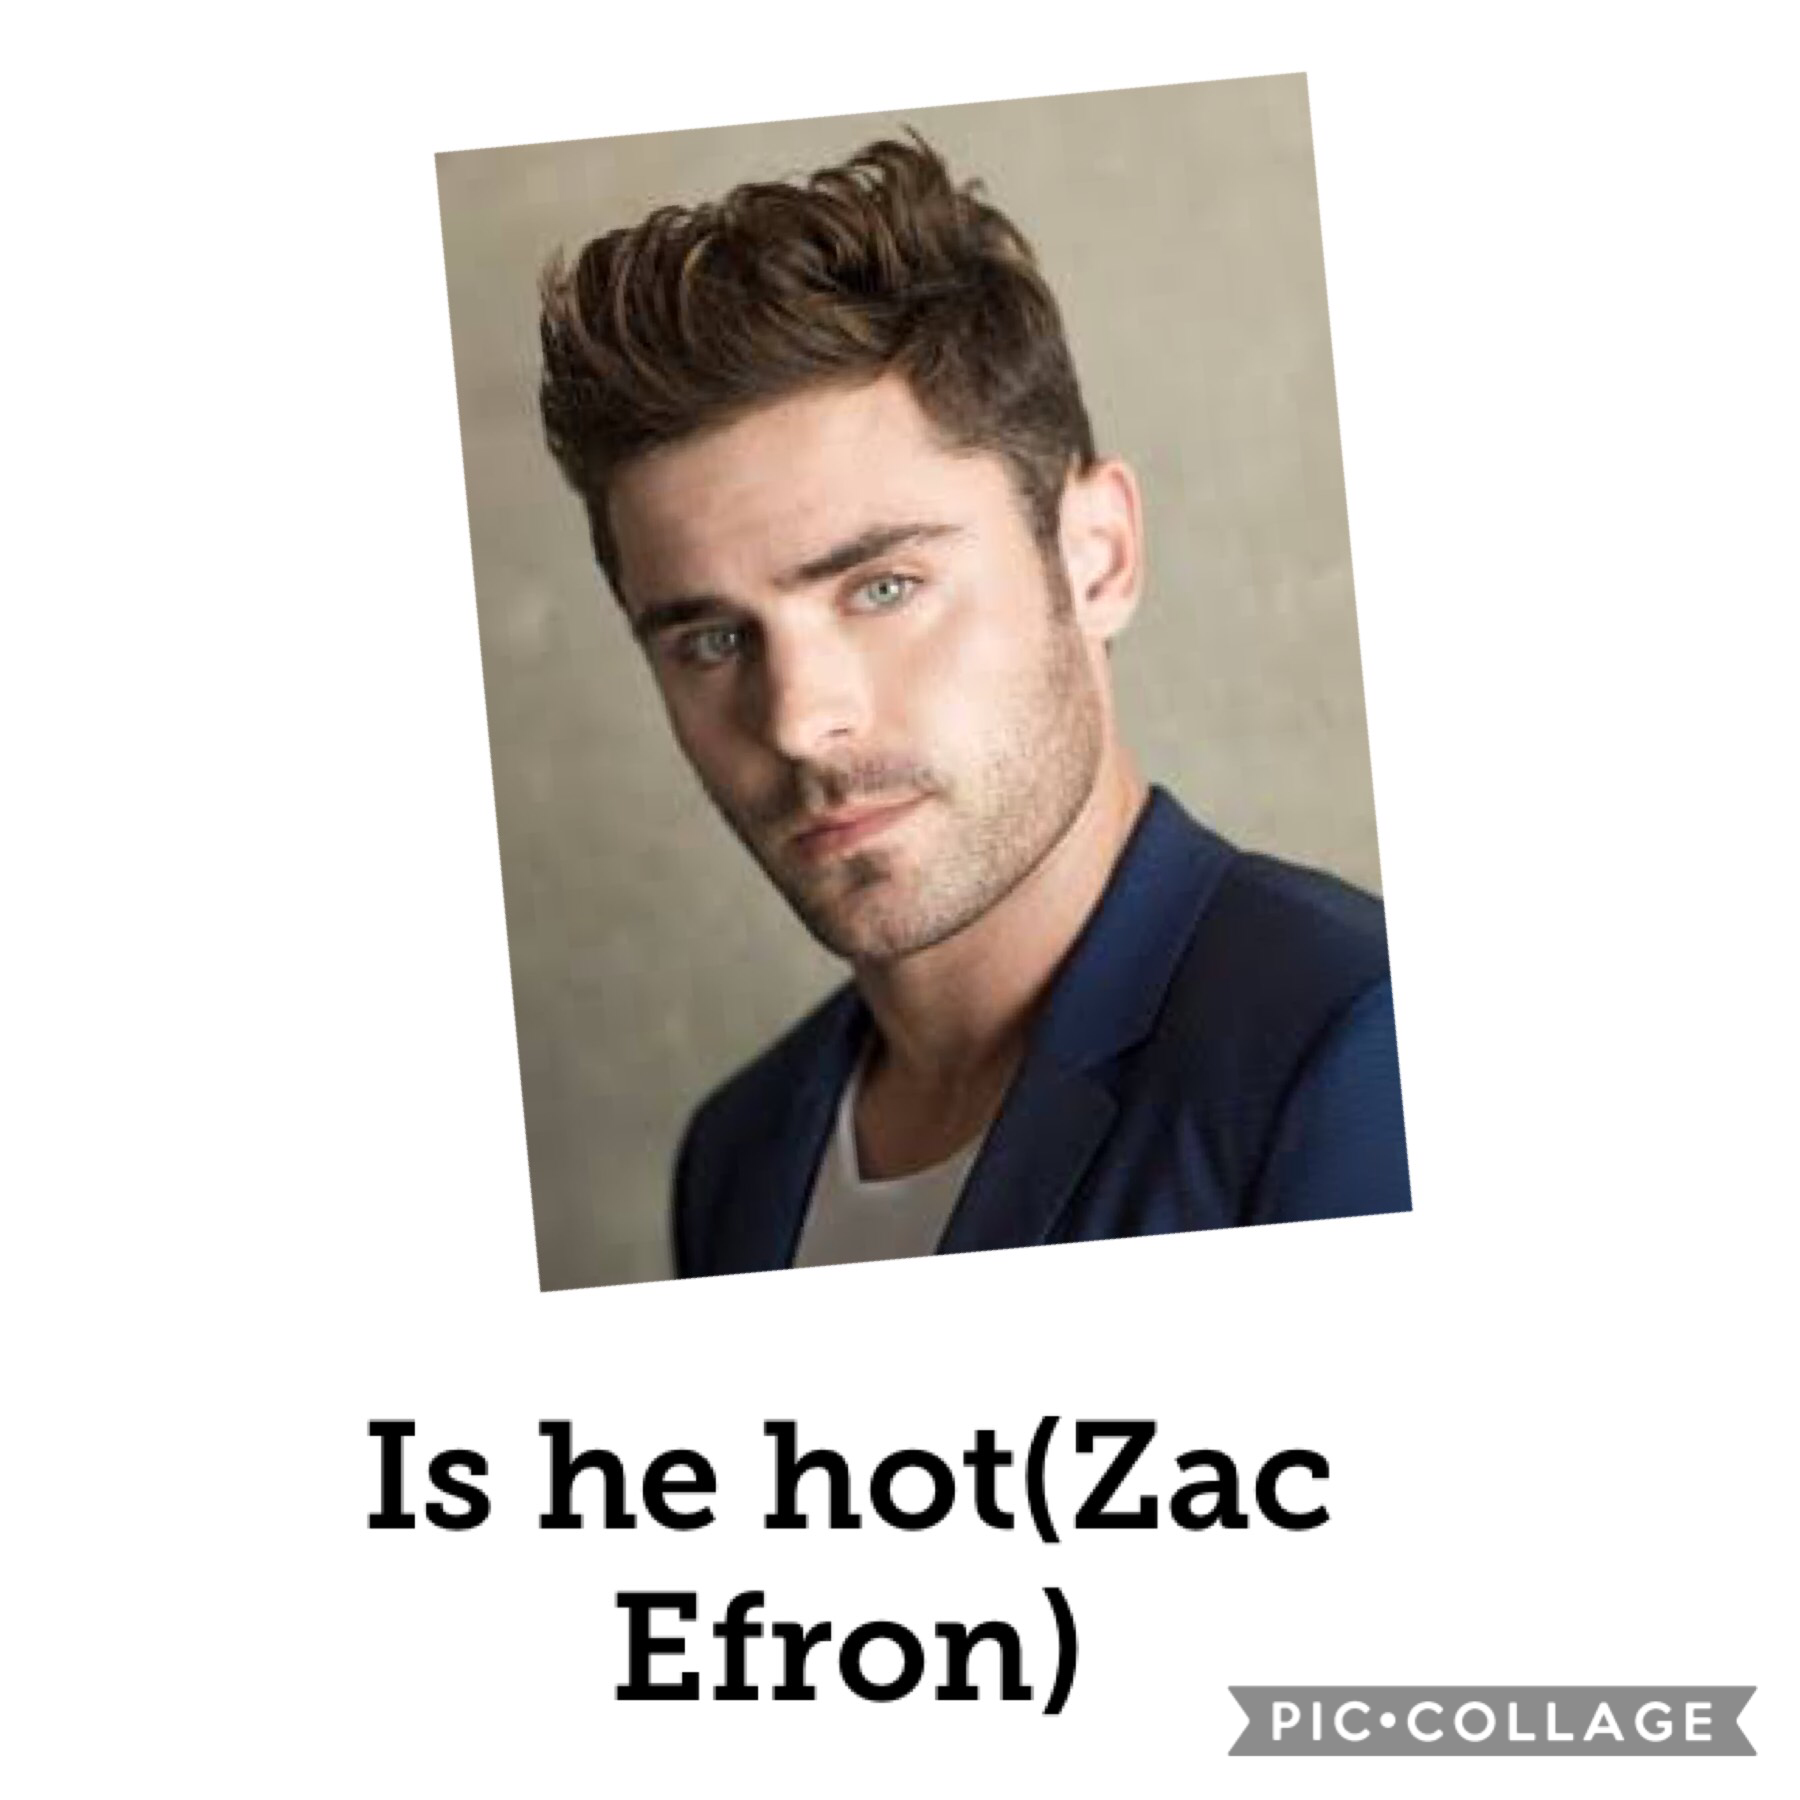 Zac Efron 